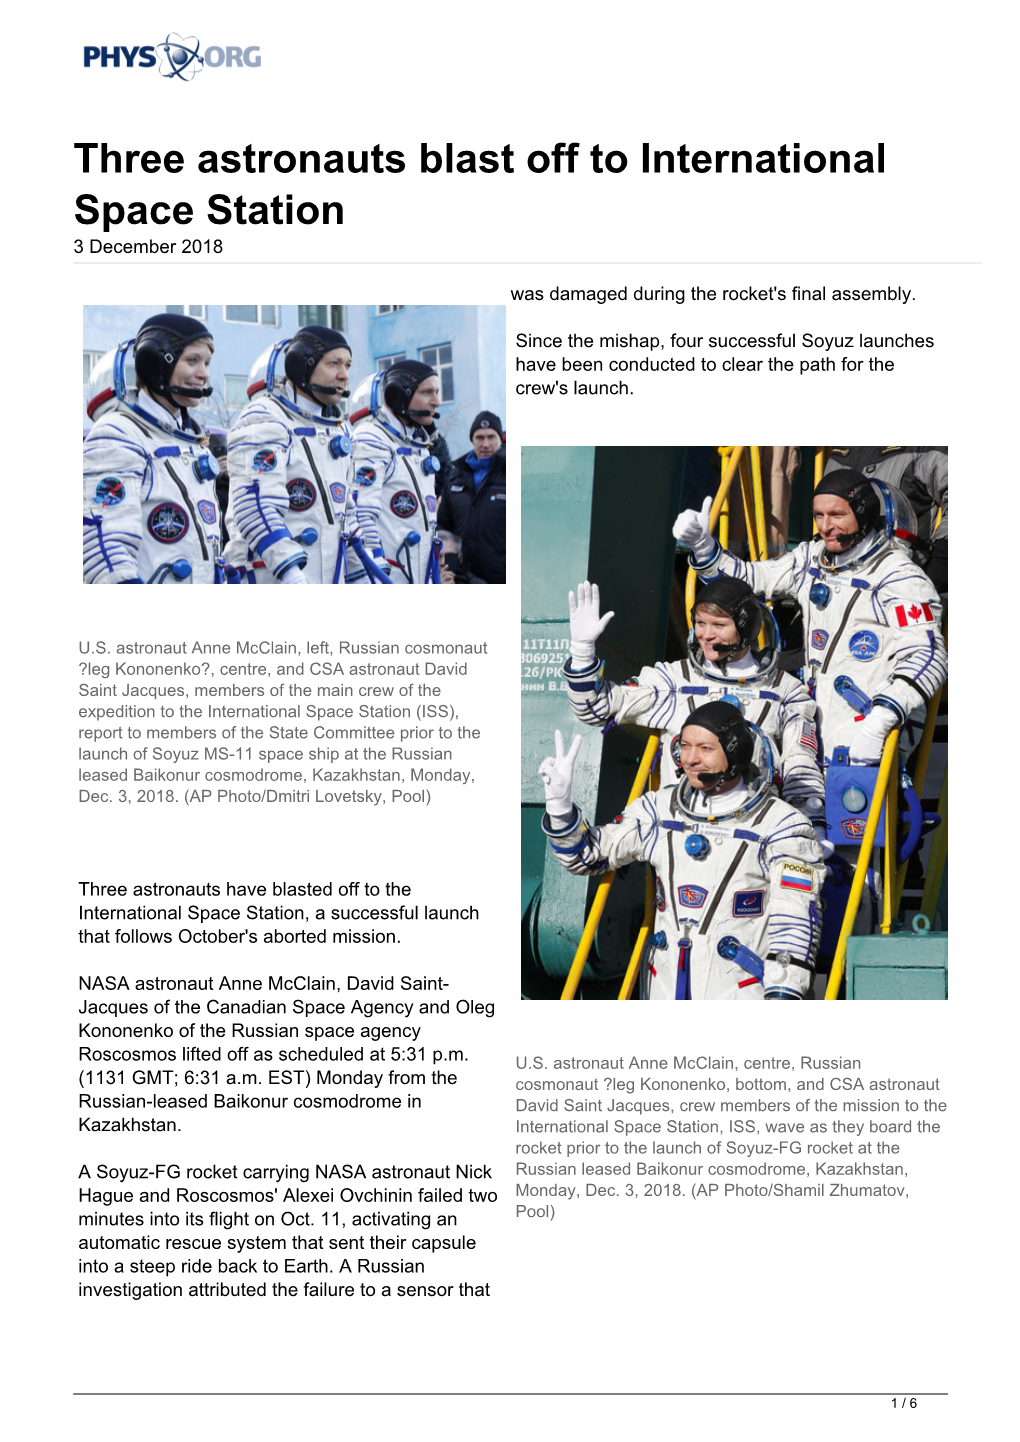 Three Astronauts Blast Off to International Space Station 3 December 2018